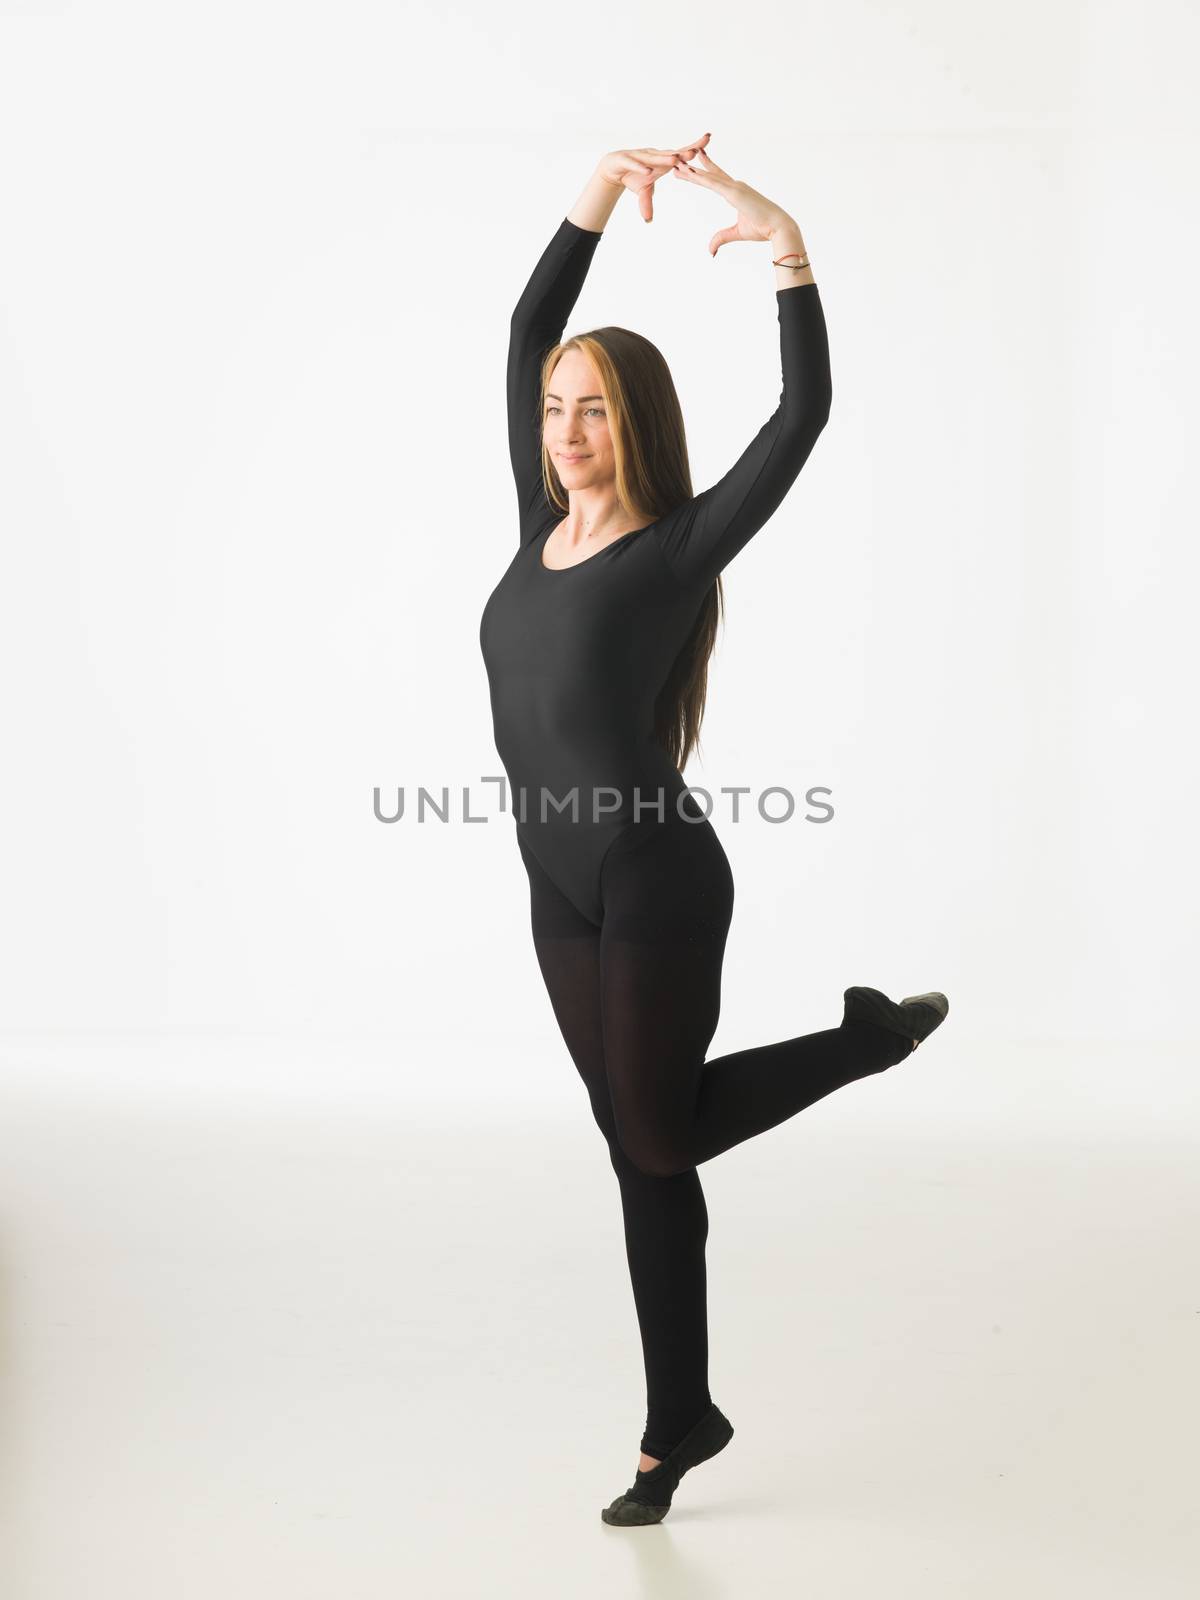 beautiful female ballet dancer standing on one leg, posing on white background